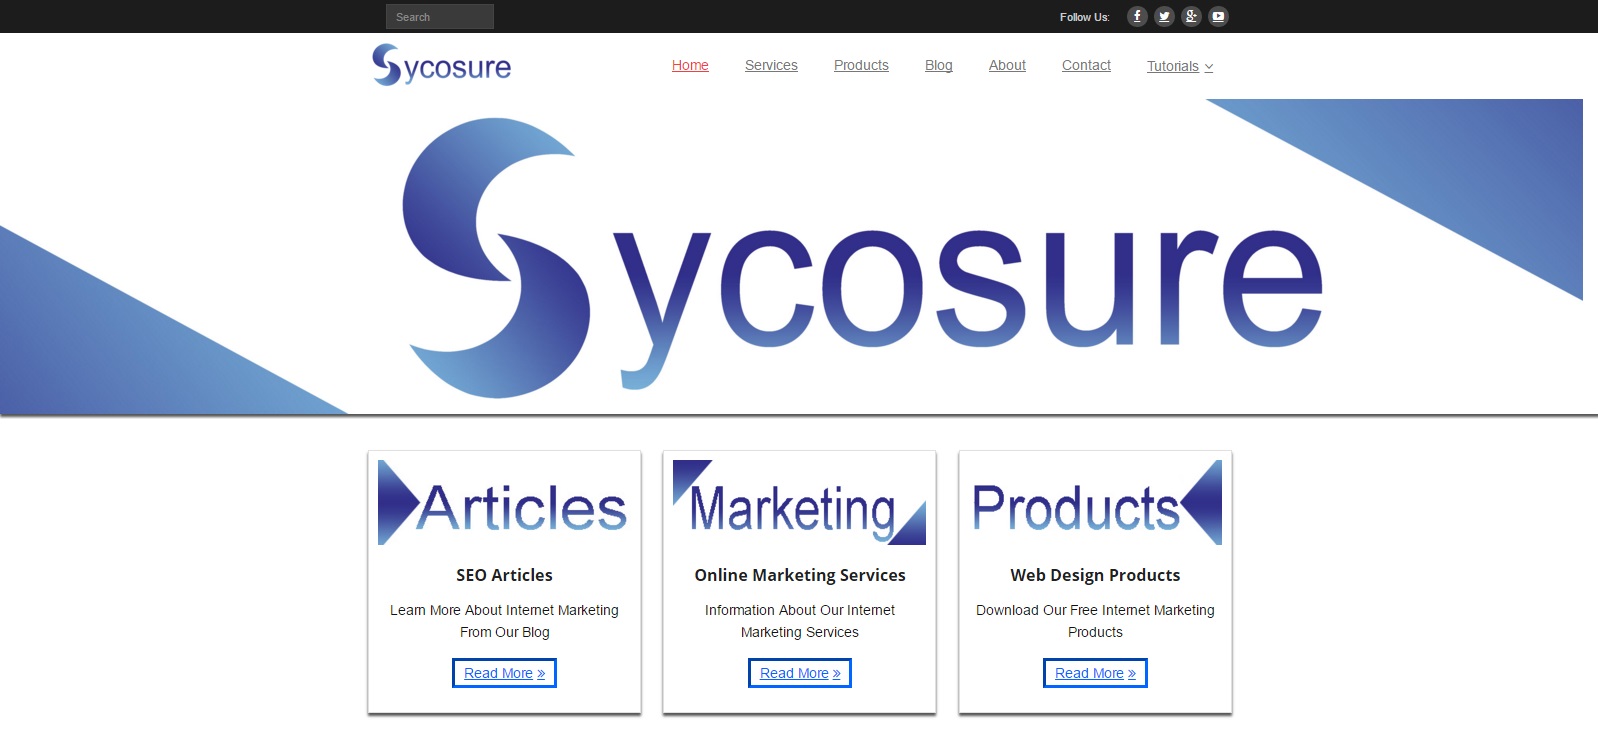 Sycosure Homepage Before